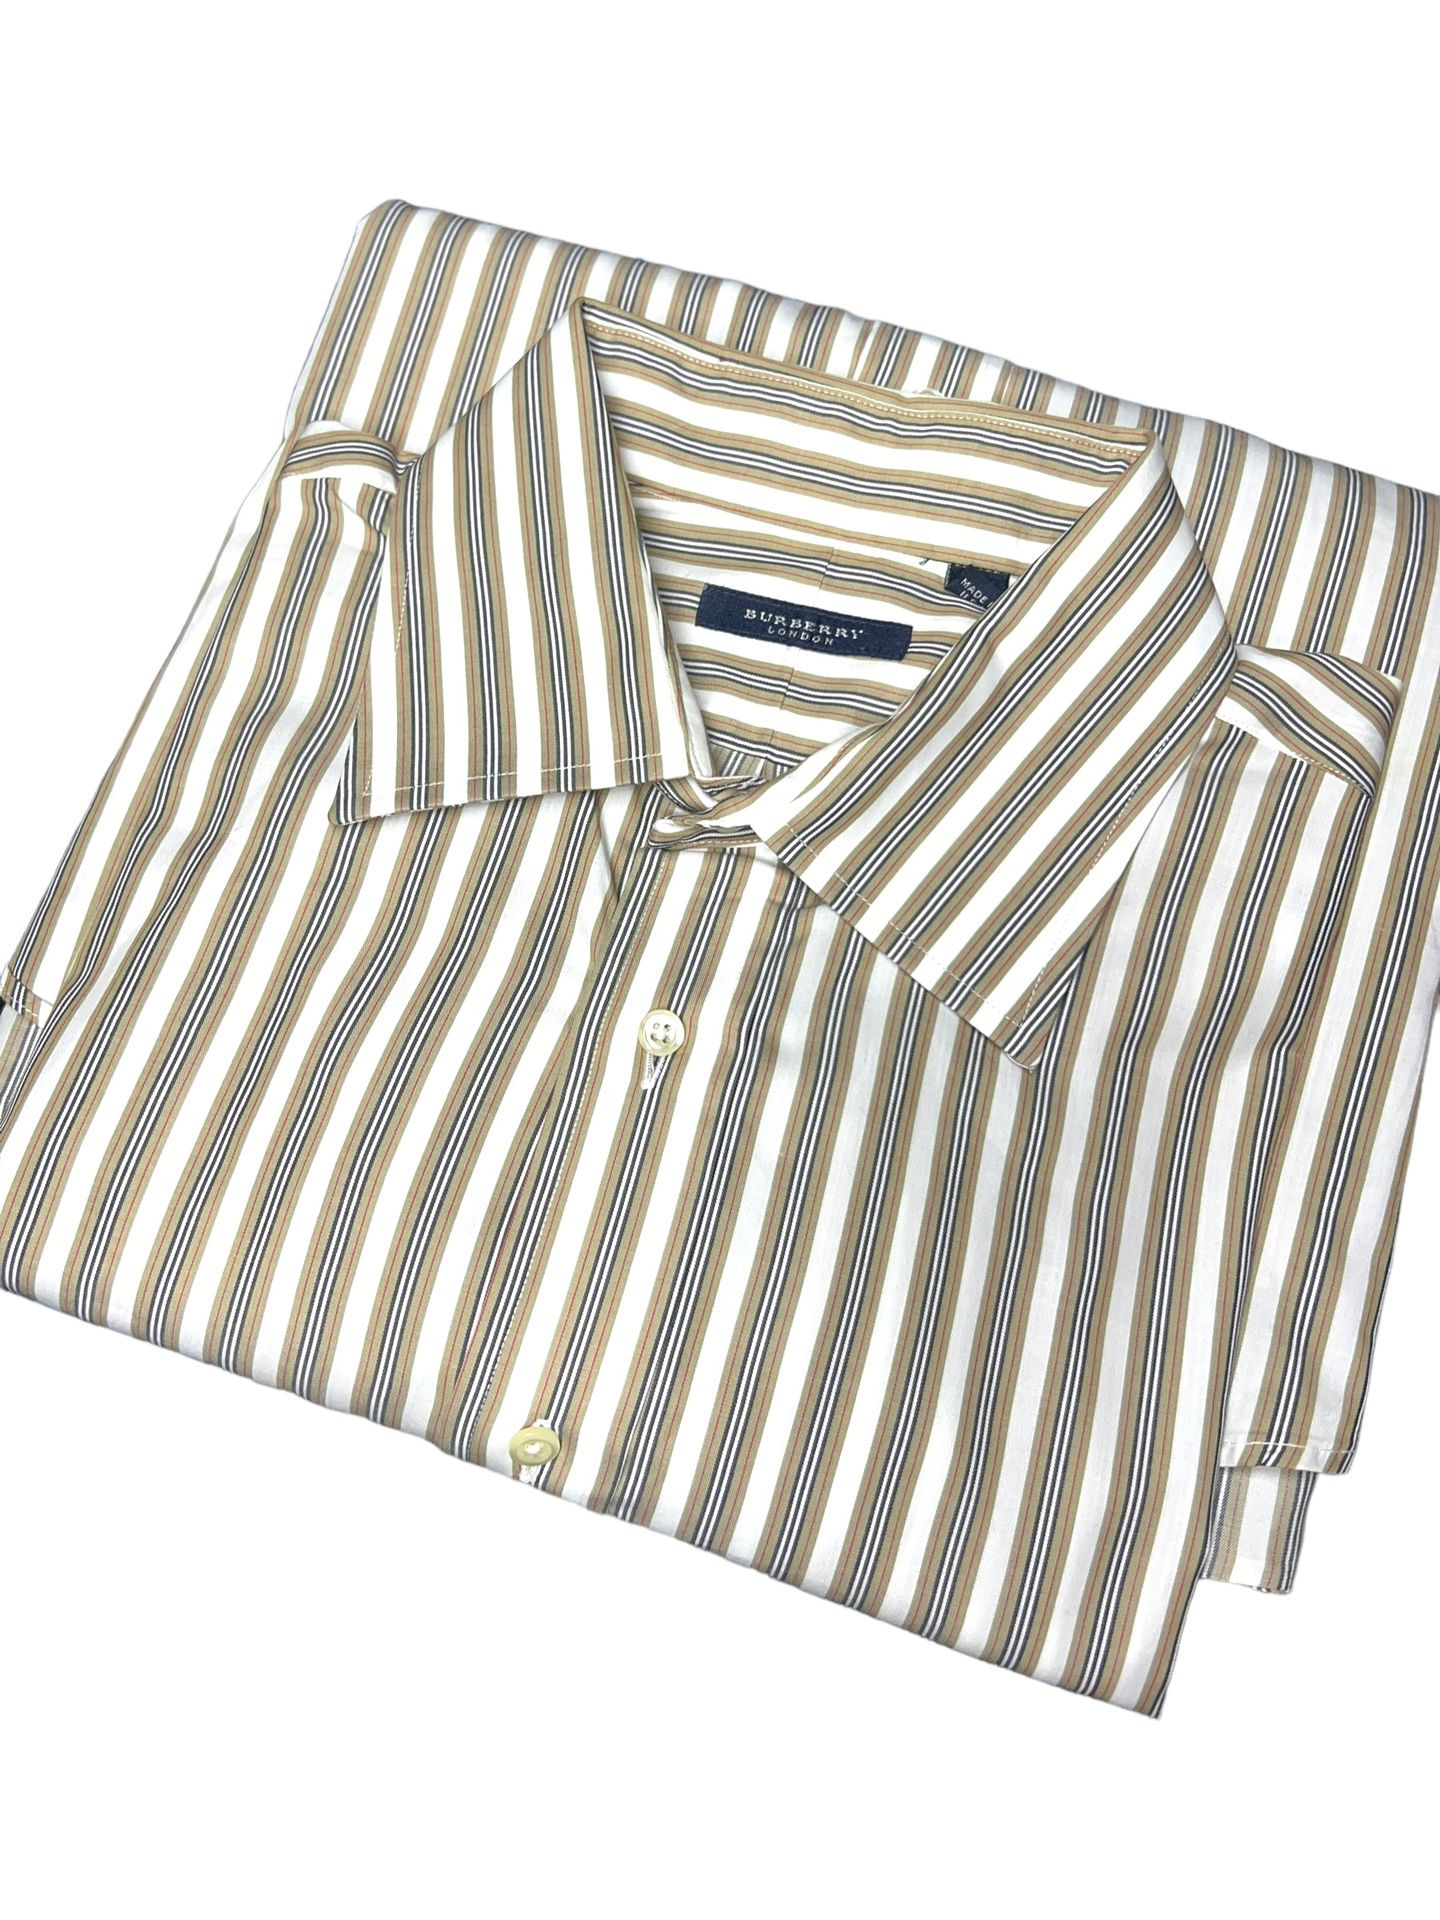 Burberry London Dress Shirt Long Sleeve Button Up Vertical Stripes Mens L